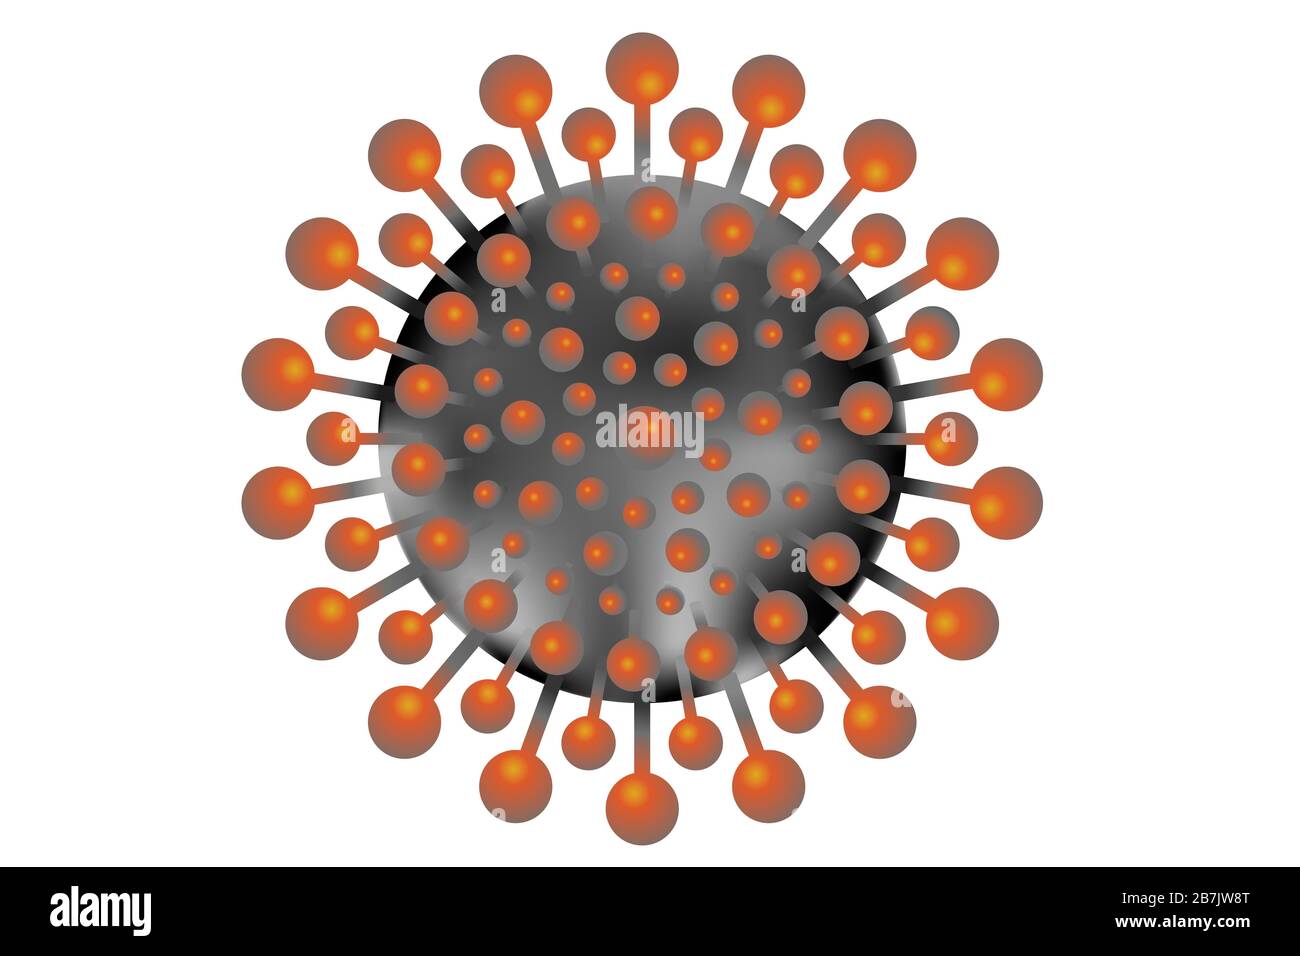 Coronavirus vector illustration of the Covid-19 virus from Wuhan China. In black and orange. Stock Photo